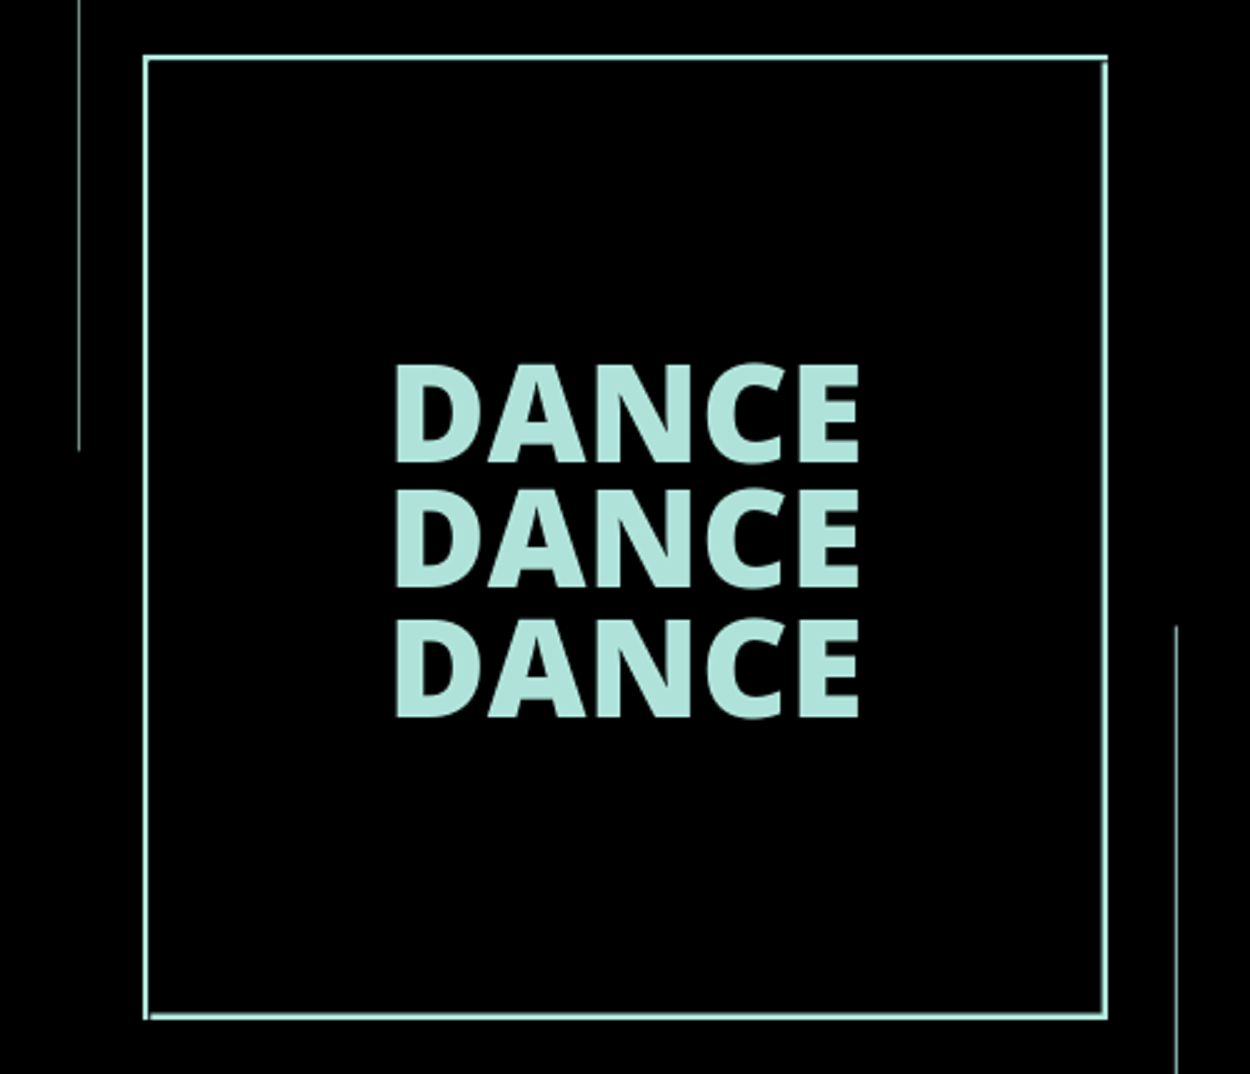 Dance, Dance, Dance the playlist